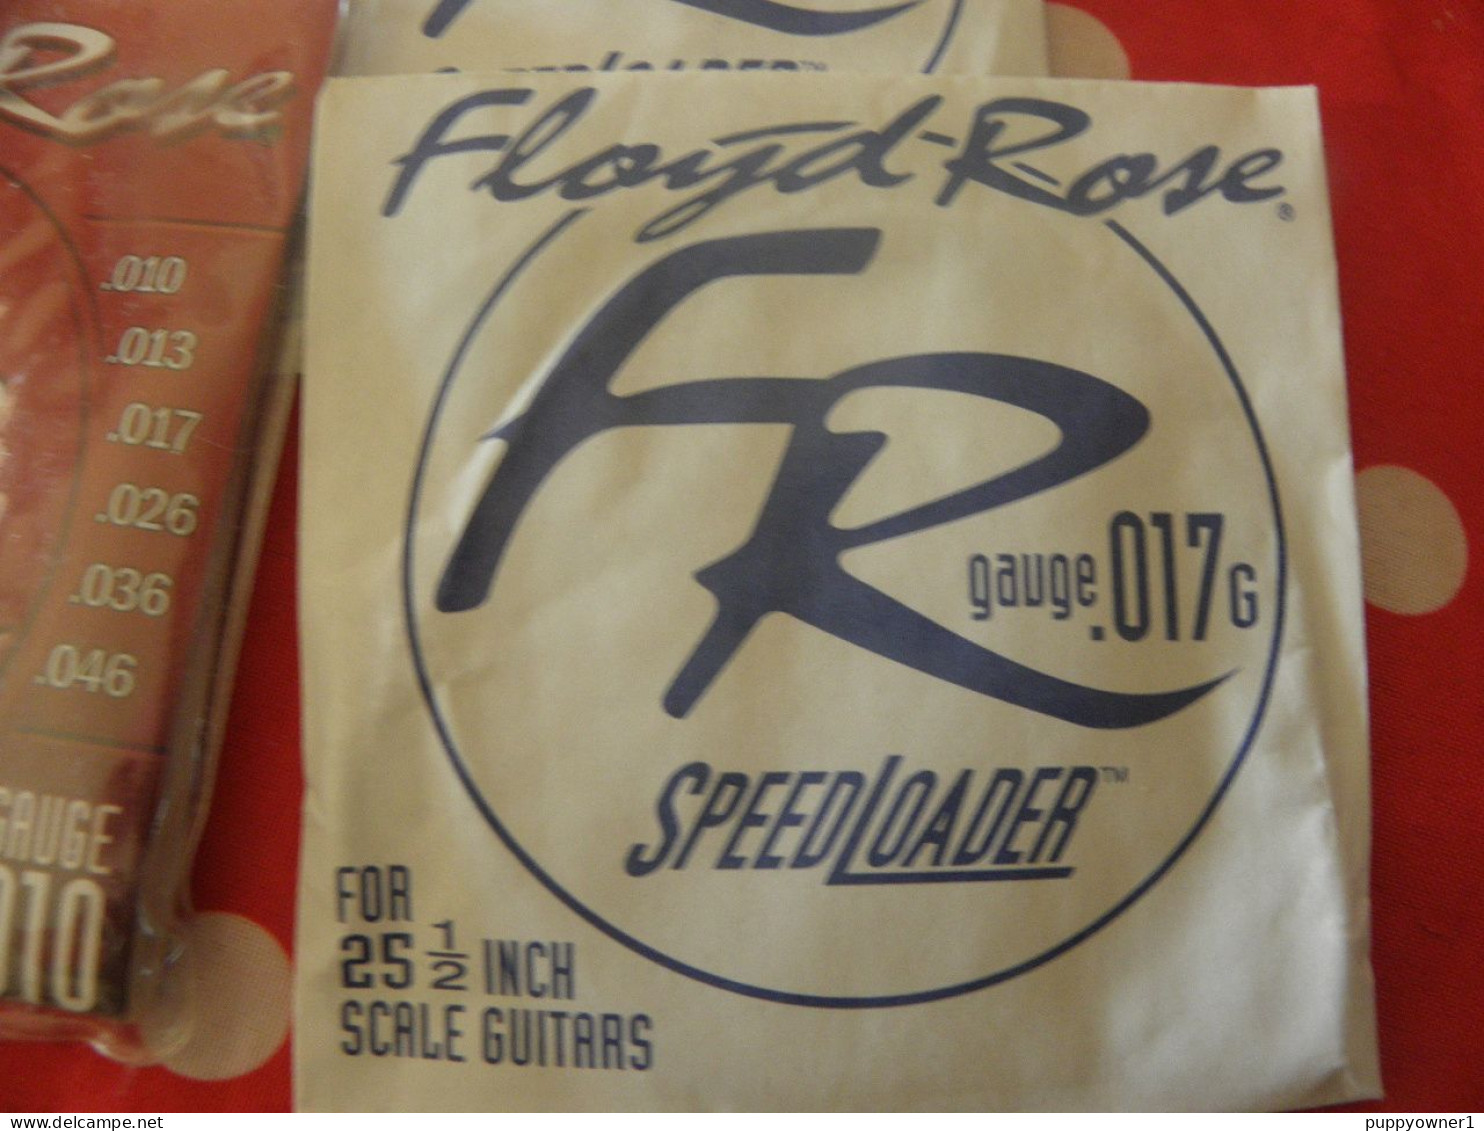 Rare 3 Floyd Rose Speedloader Pour 25.5 Inch Scale Guitar Corde De Guitare 0.017g - Muziekinstrumenten